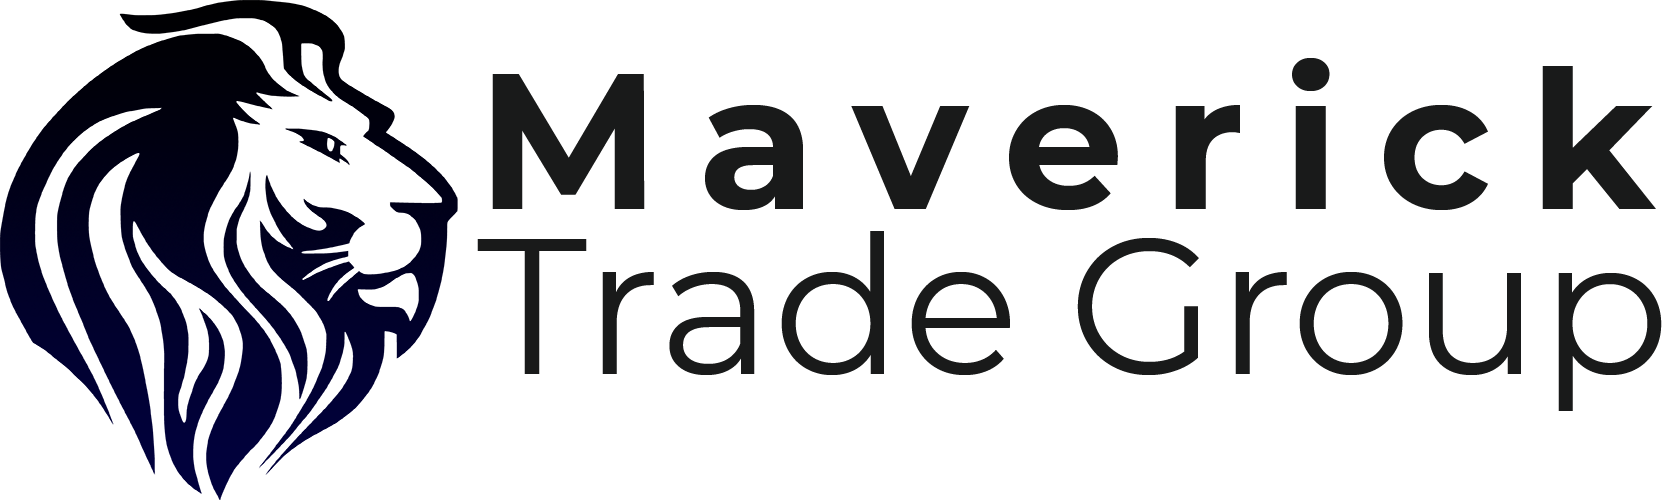 Maverick Trade Group